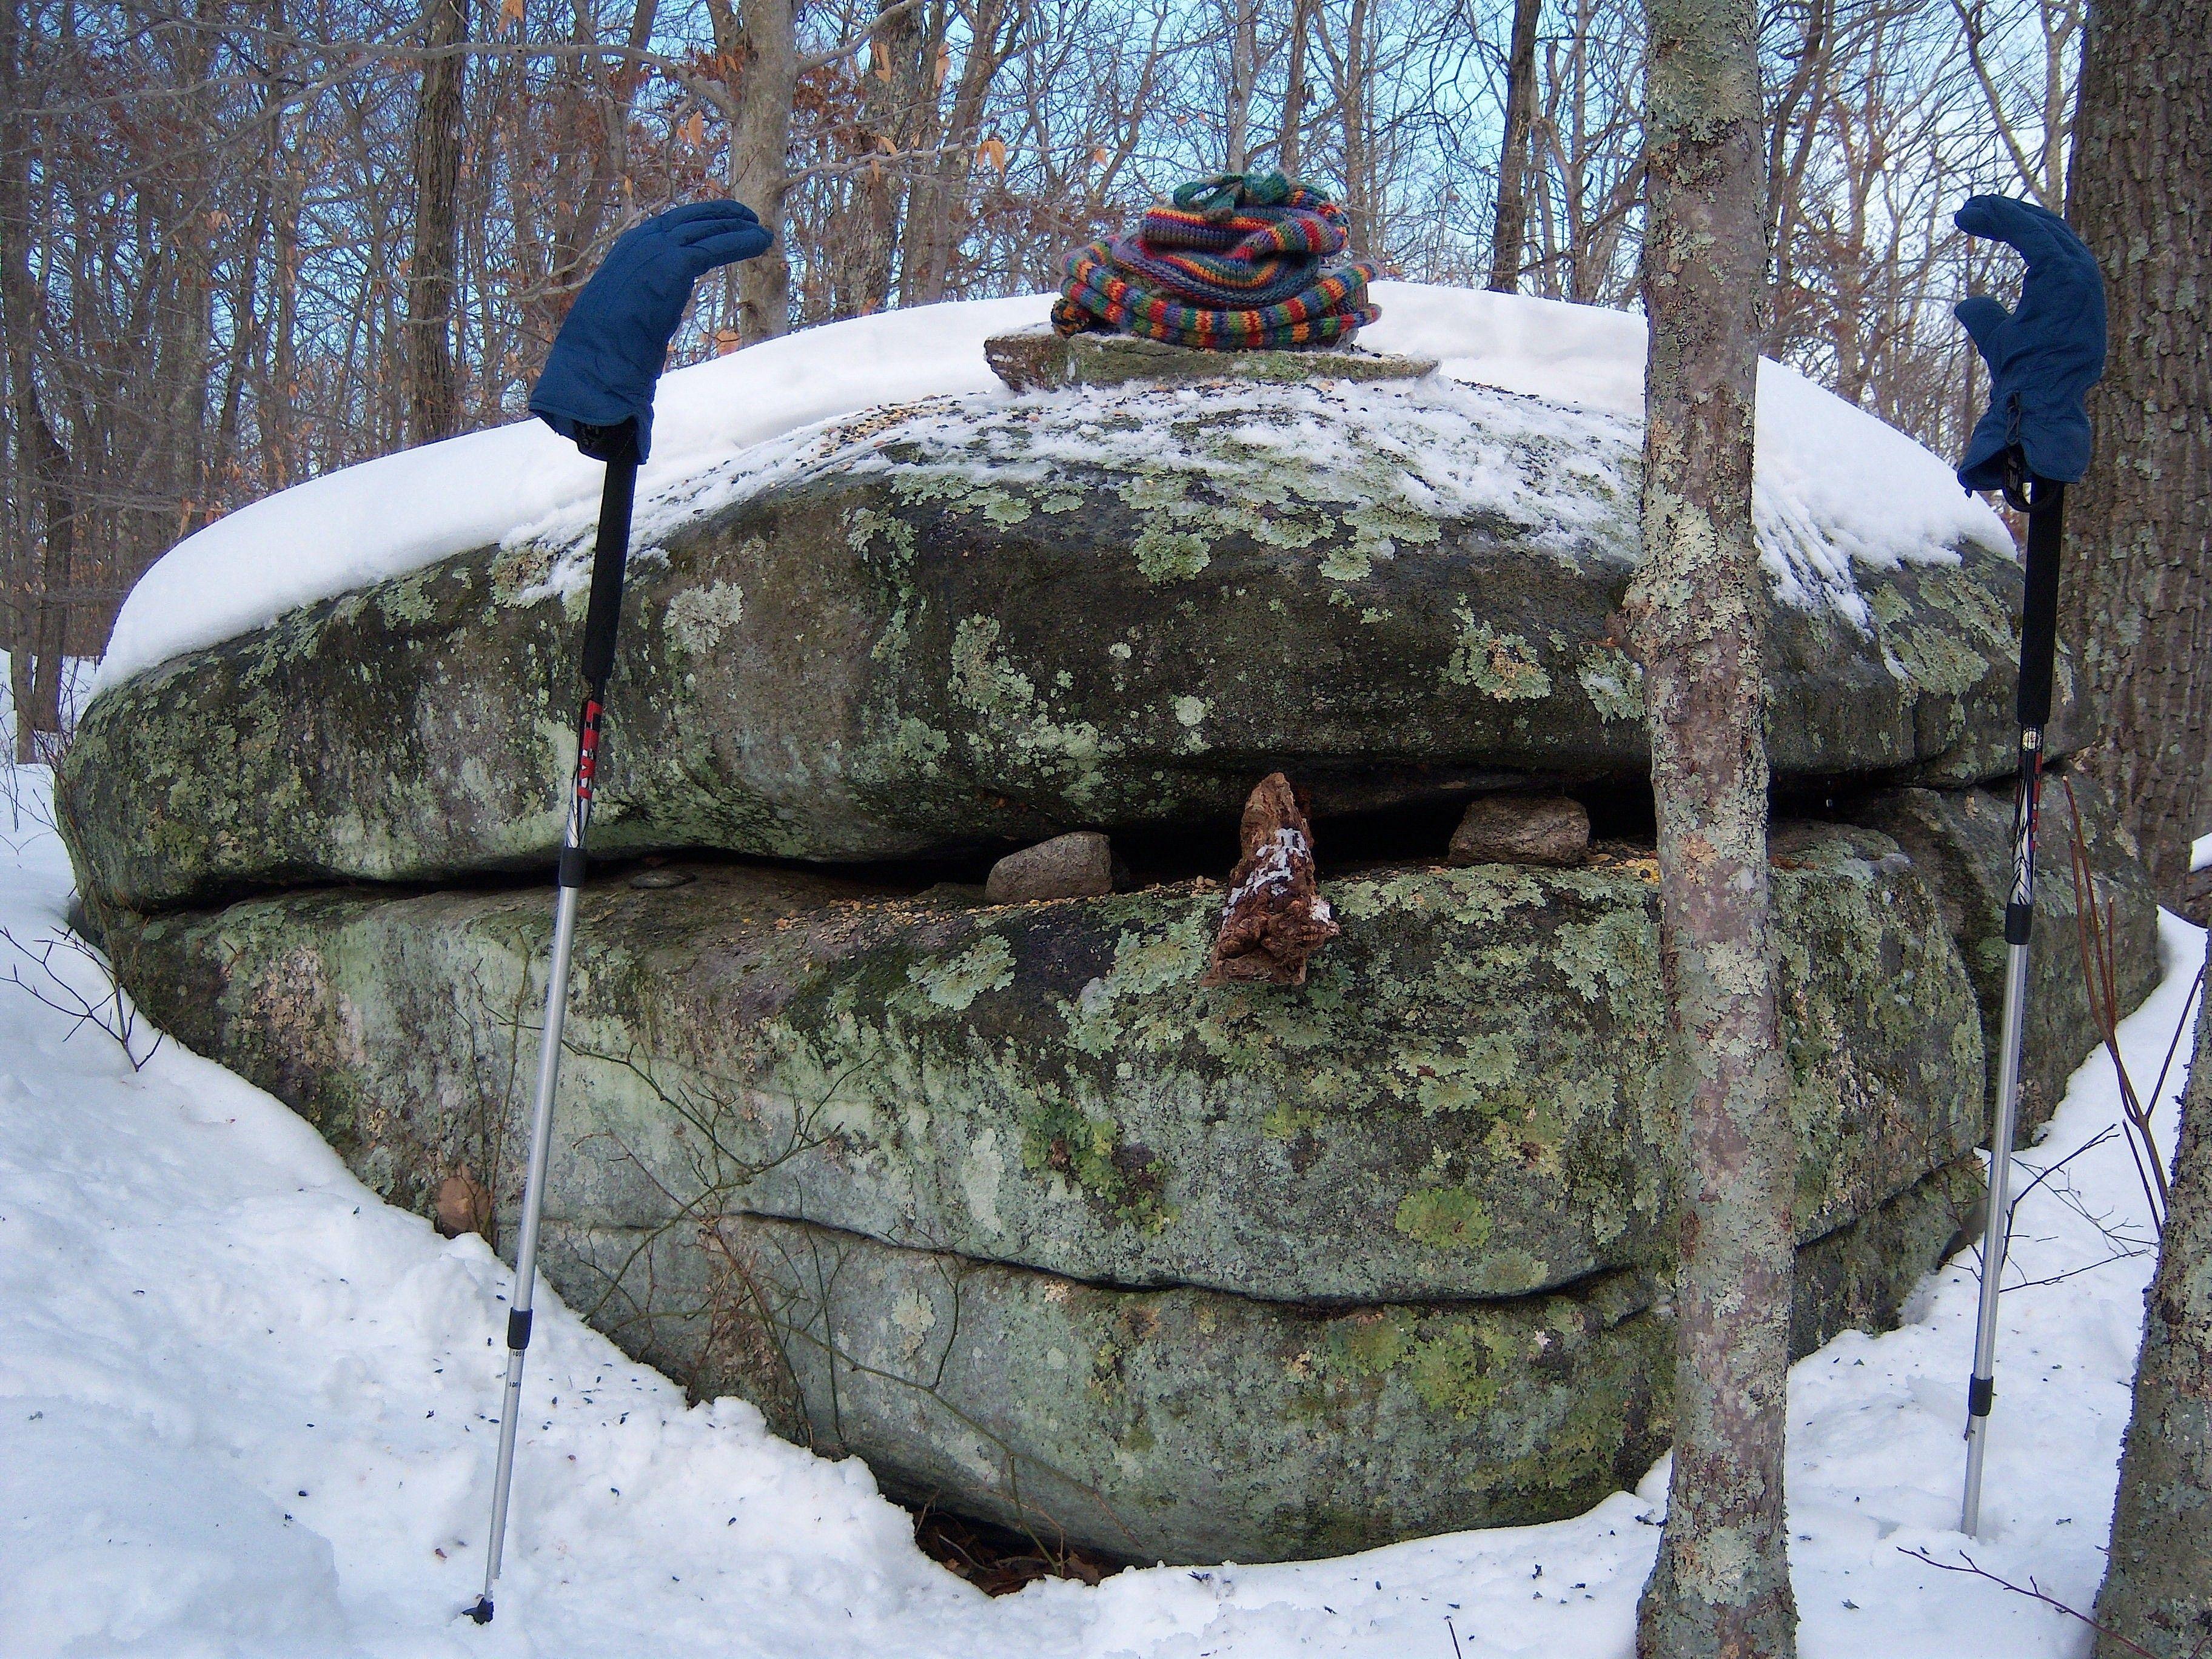 Forest: SAM Warm Winter Wear Chatfield Hollow Trails Boulders